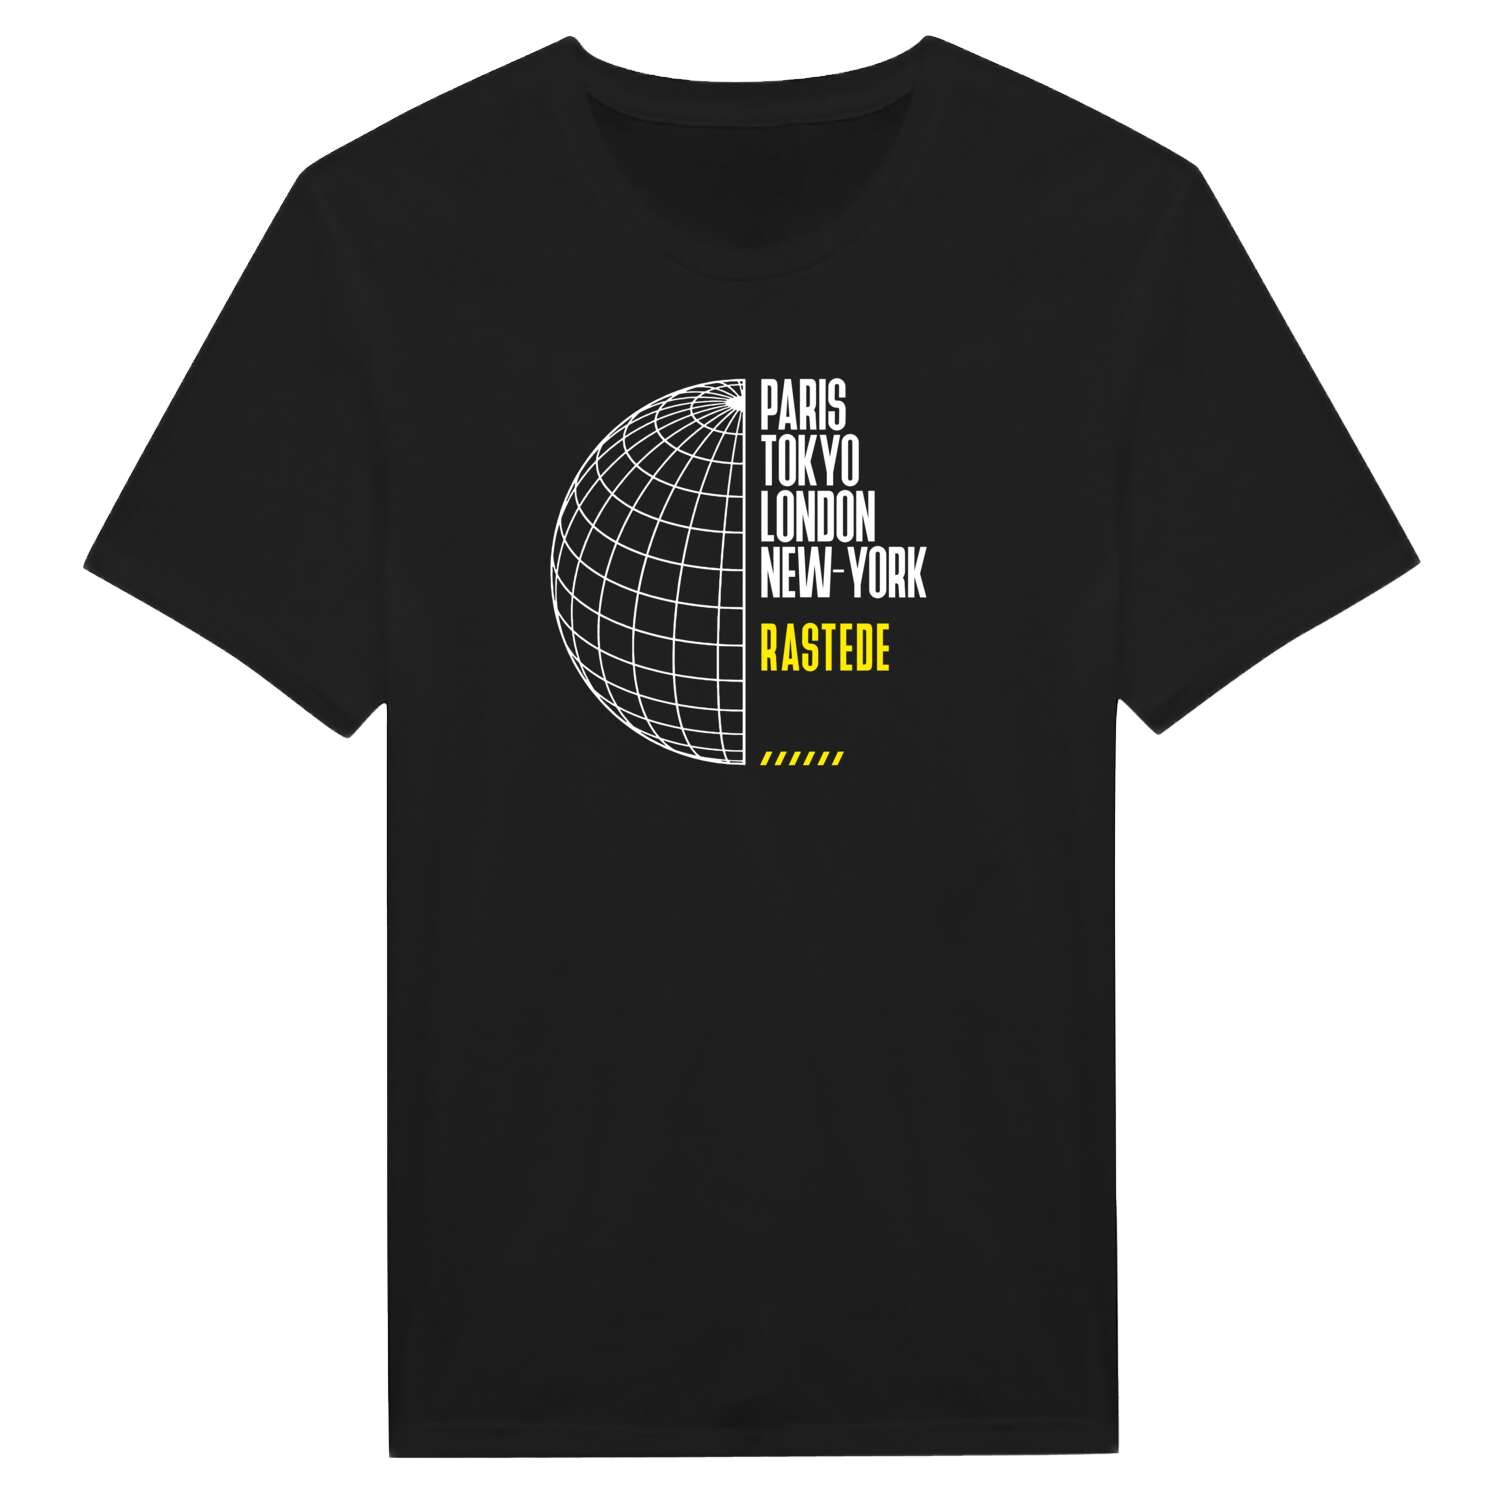 Rastede T-Shirt »Paris Tokyo London«